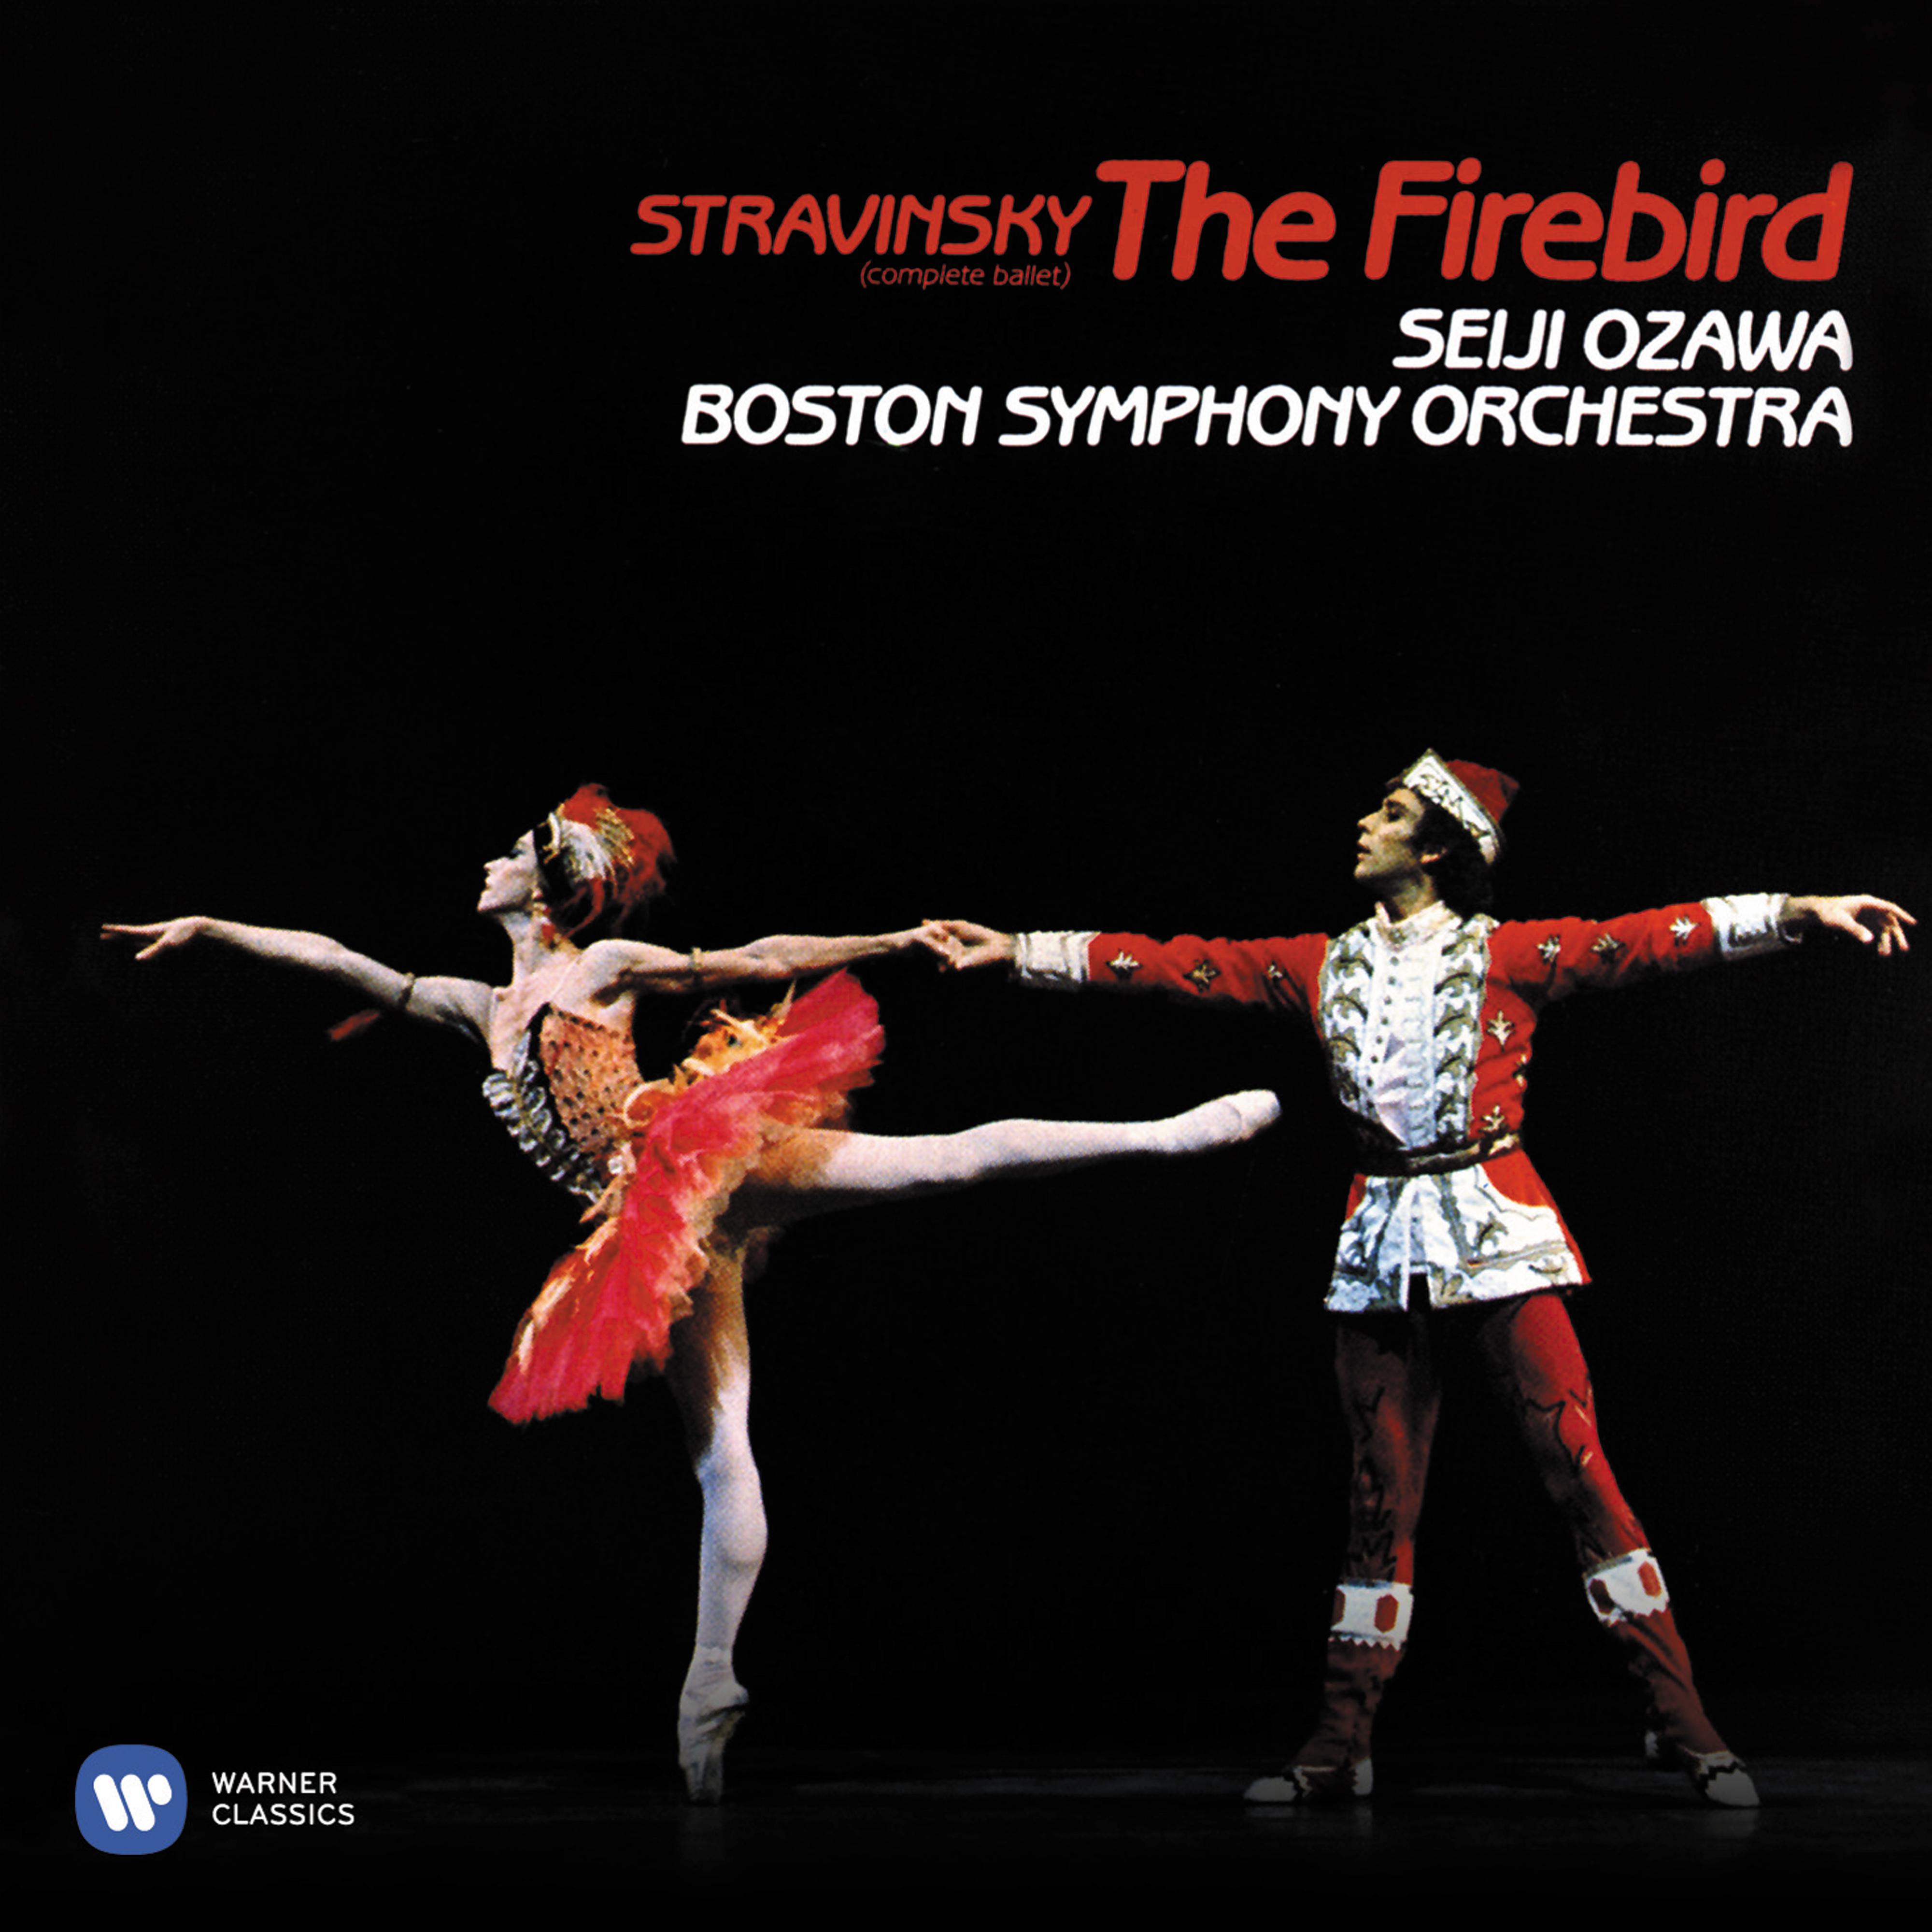 The Firebird:Introduction